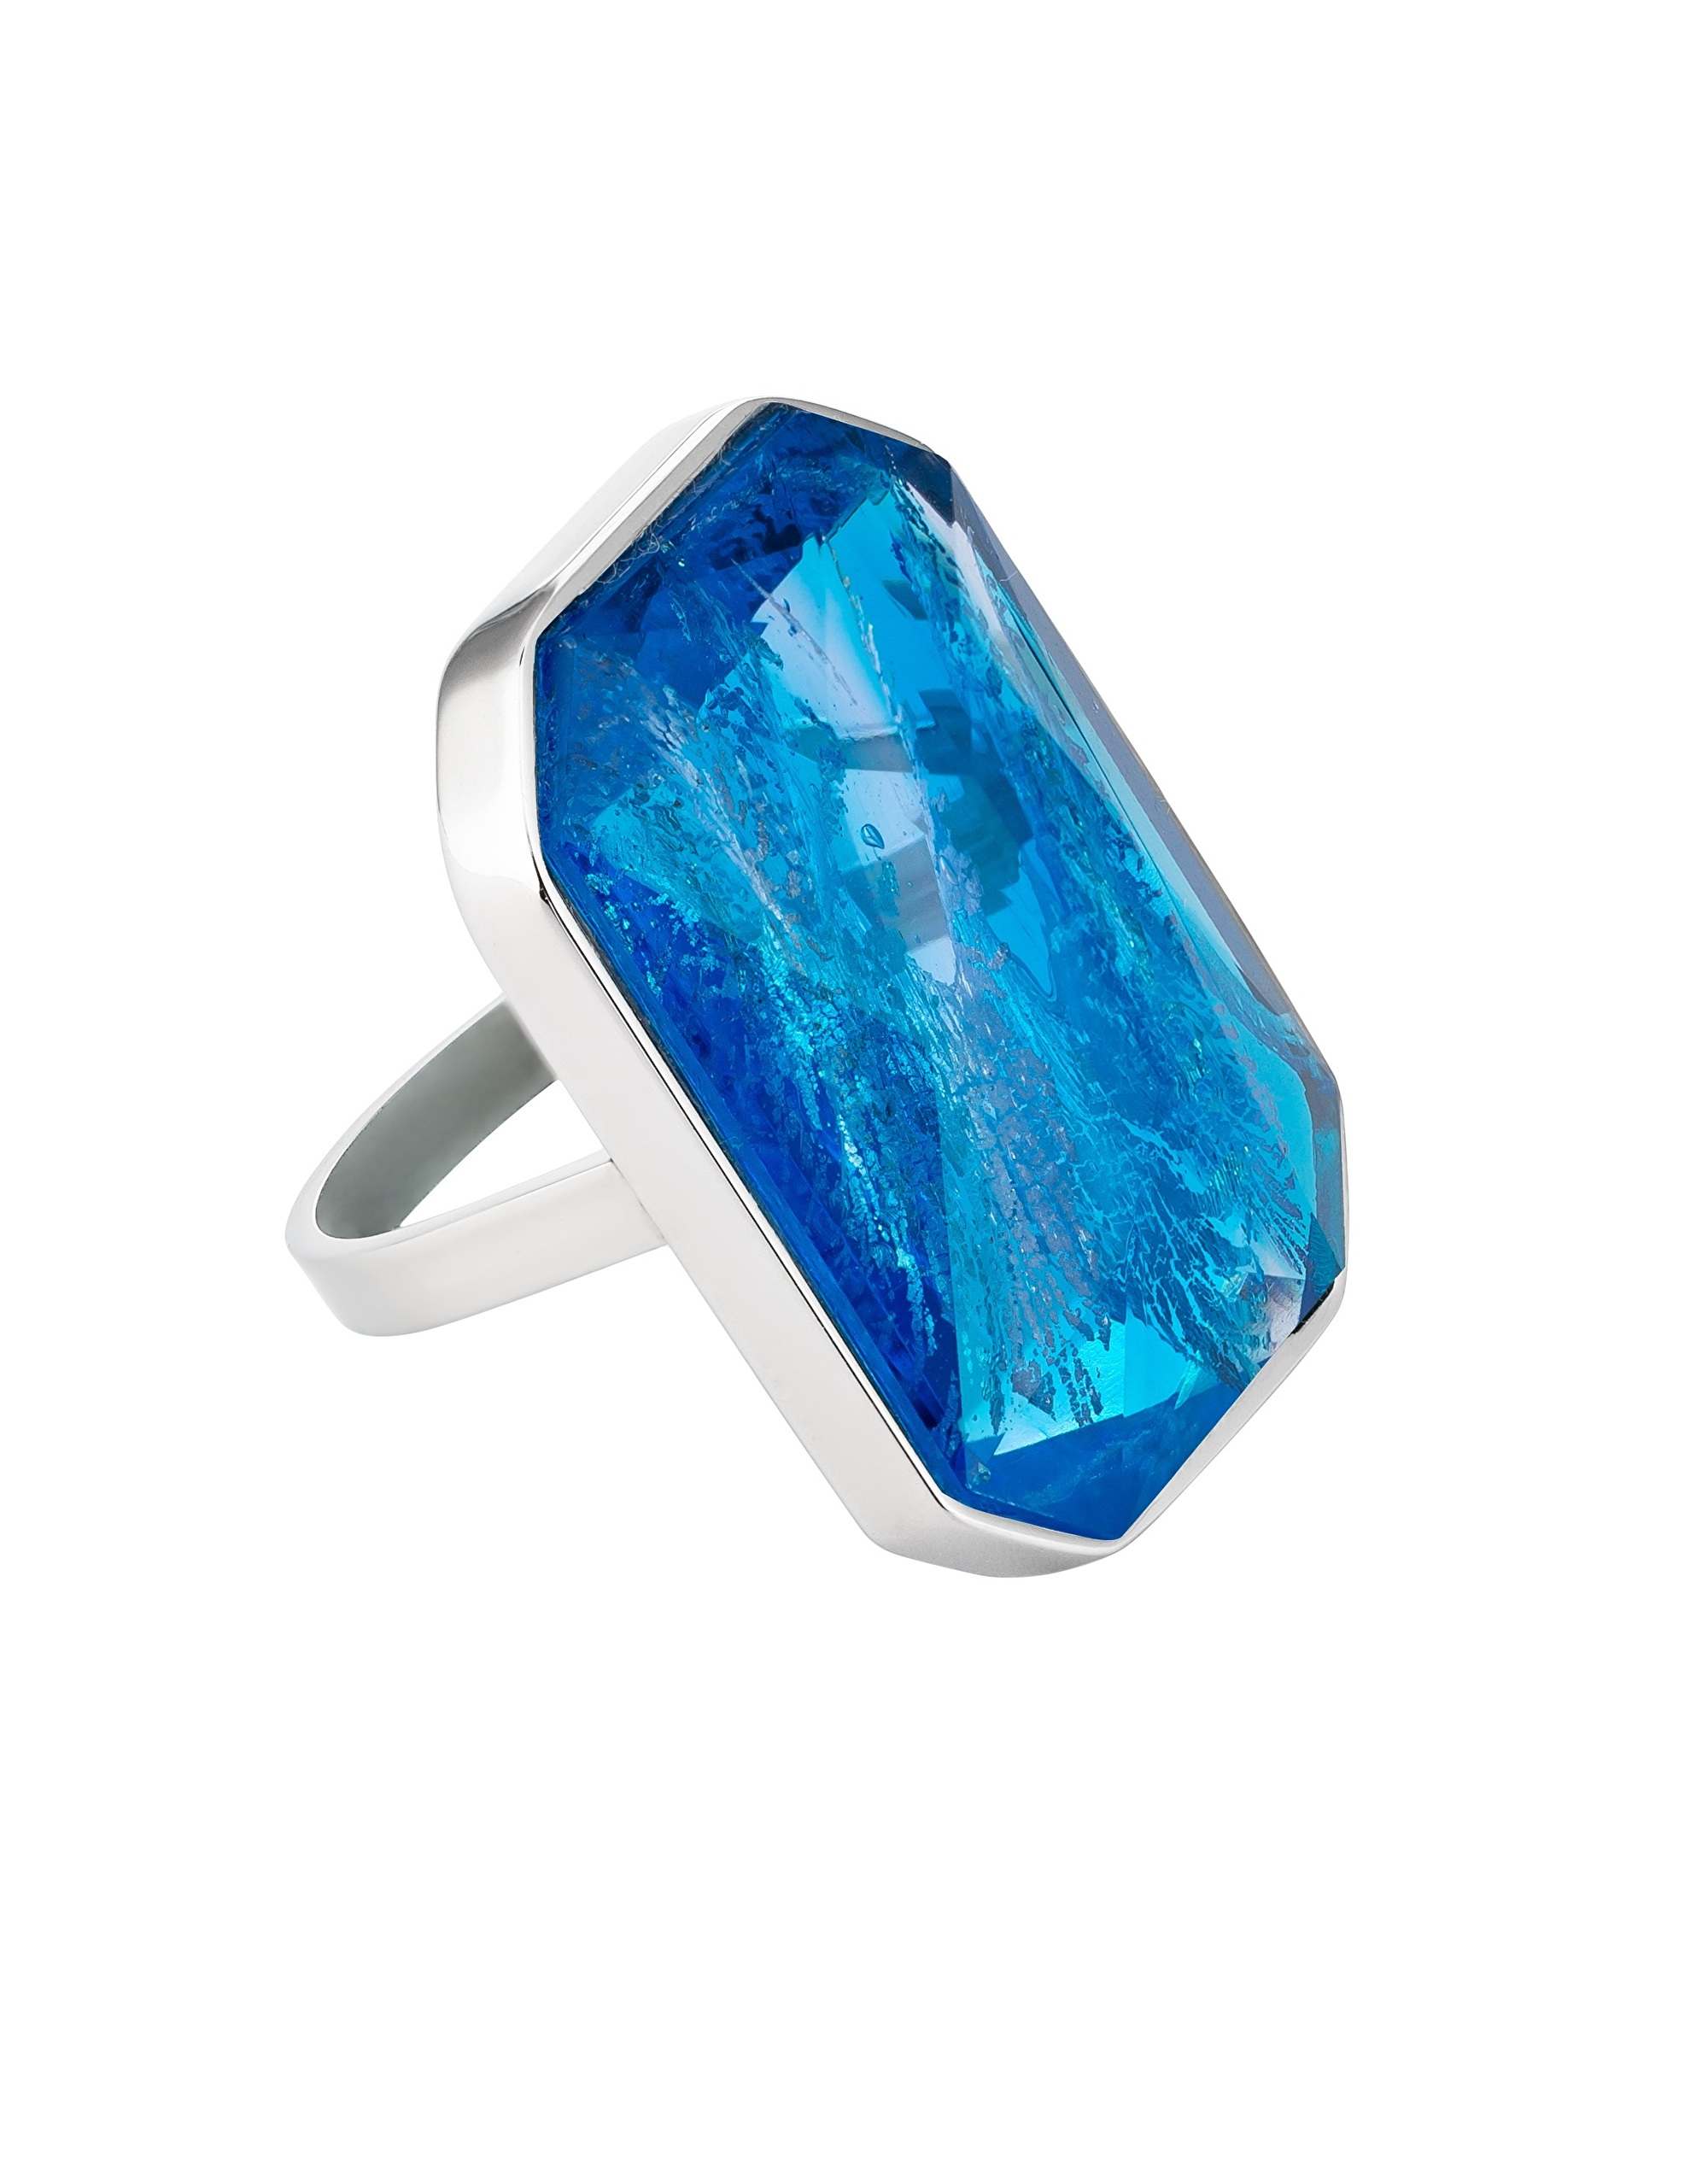 Preciosa Luxusní ocelový prsten s ručně mačkaným kamenem českého křišťálu Preciosa Ocean Aqua 7446 67 57 mm